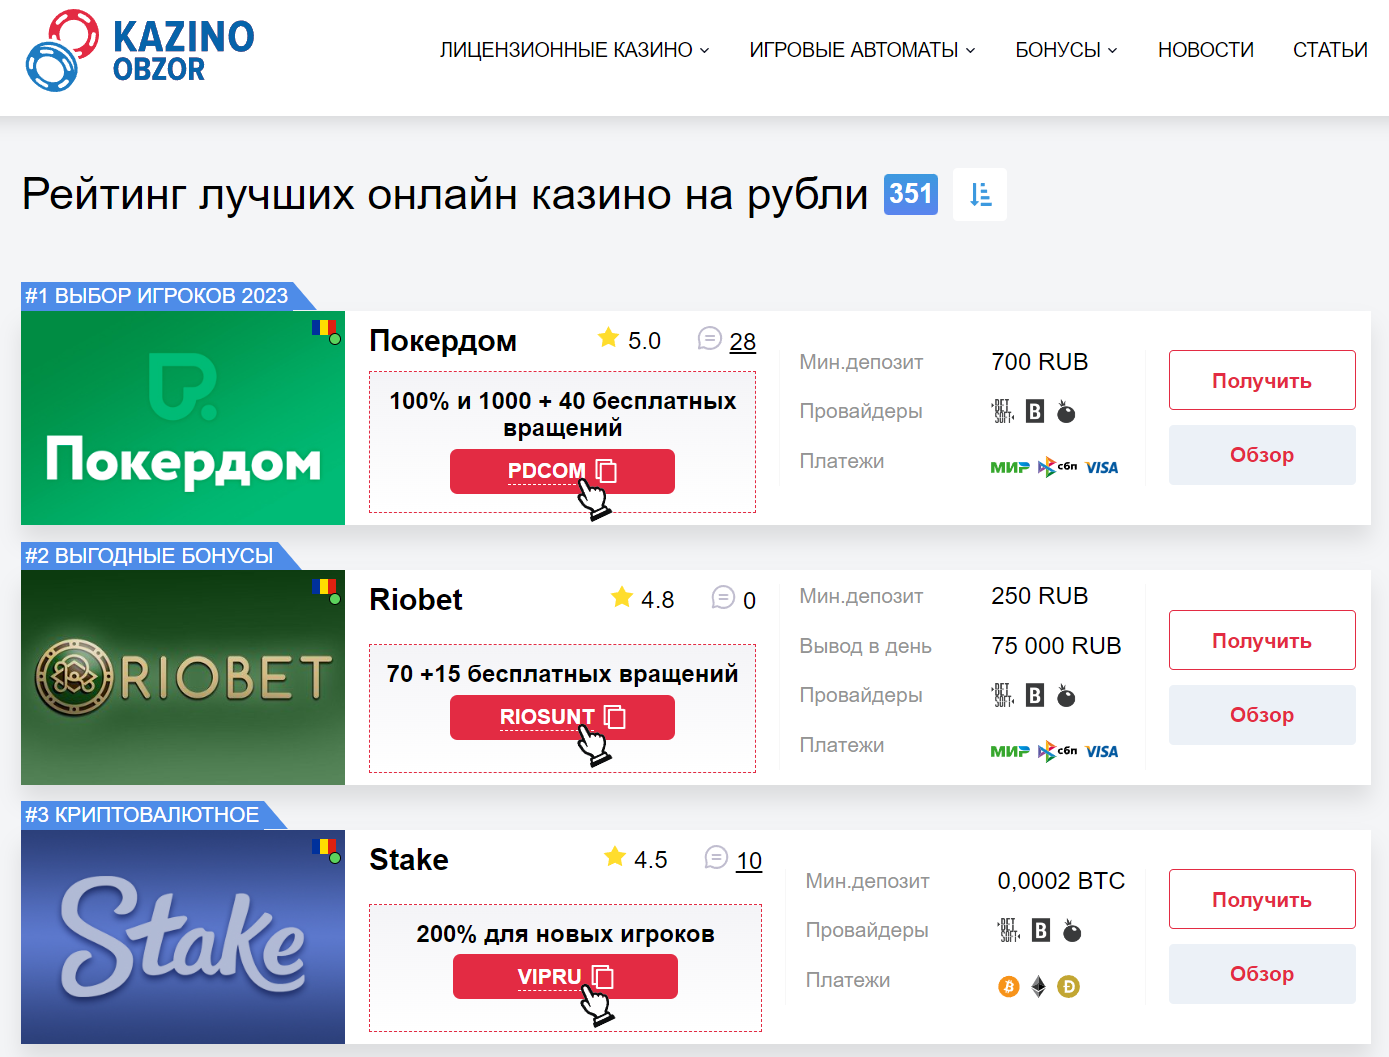 Download Почему онлайн казино на рубли популярны? Android free game.